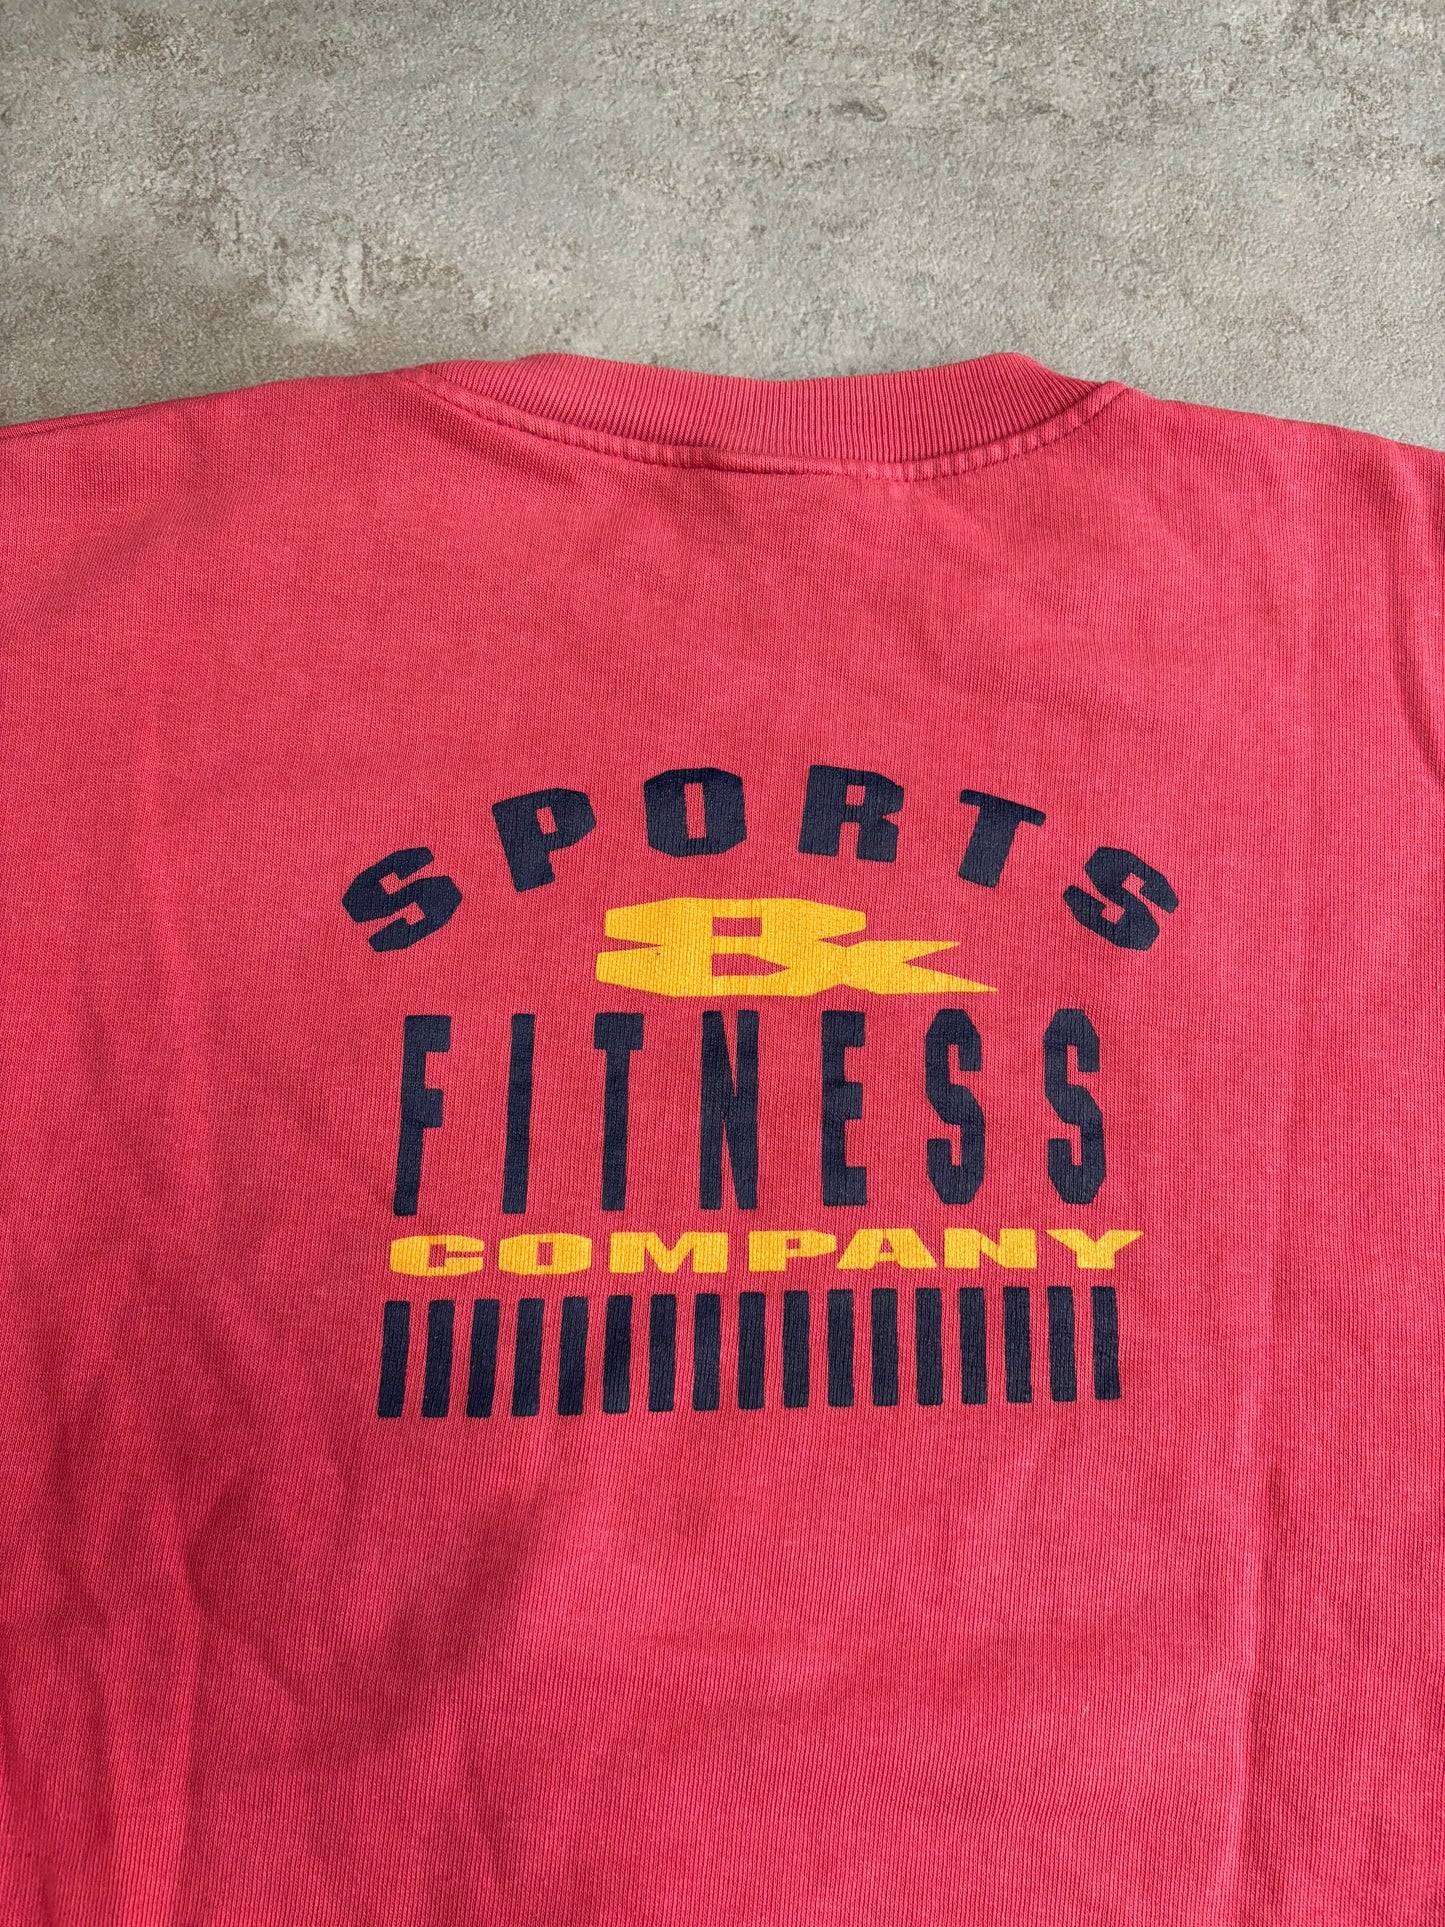 Nike 'Sport &amp; Fitness' 80d Vintage Sweatshirt - L